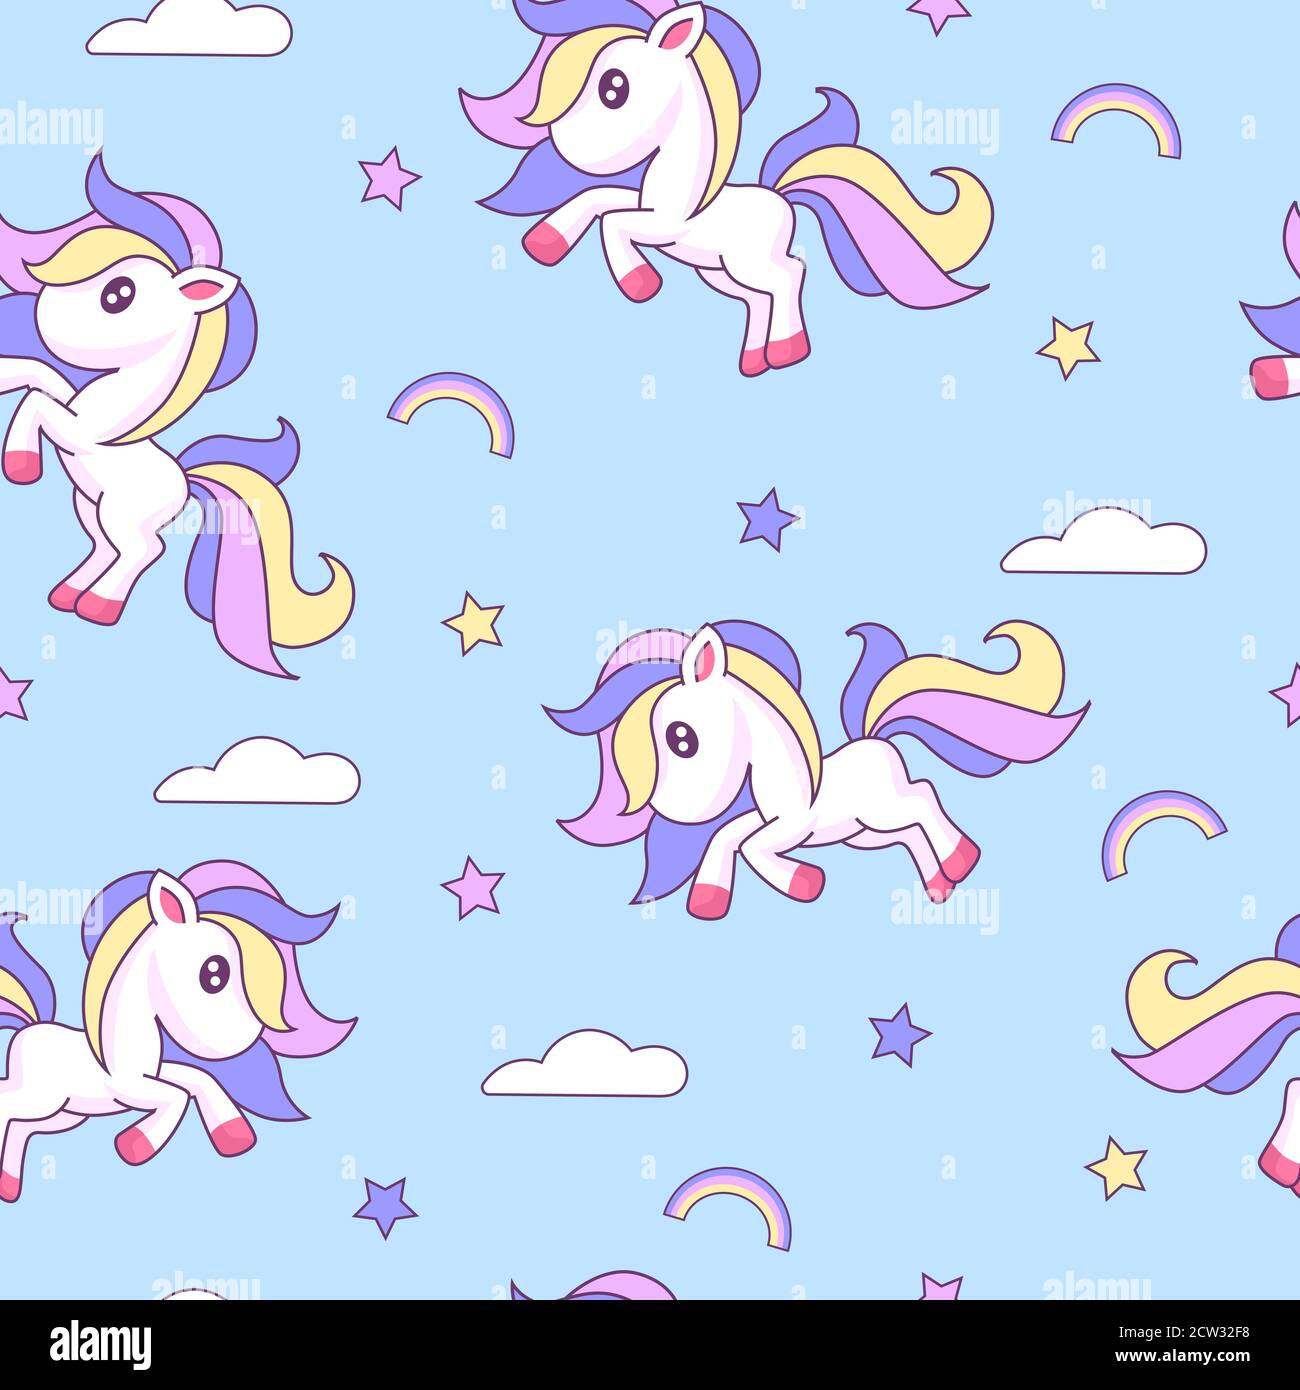 Cute unicorn seamless pattern. Magic cartoon animal with purple pink ...